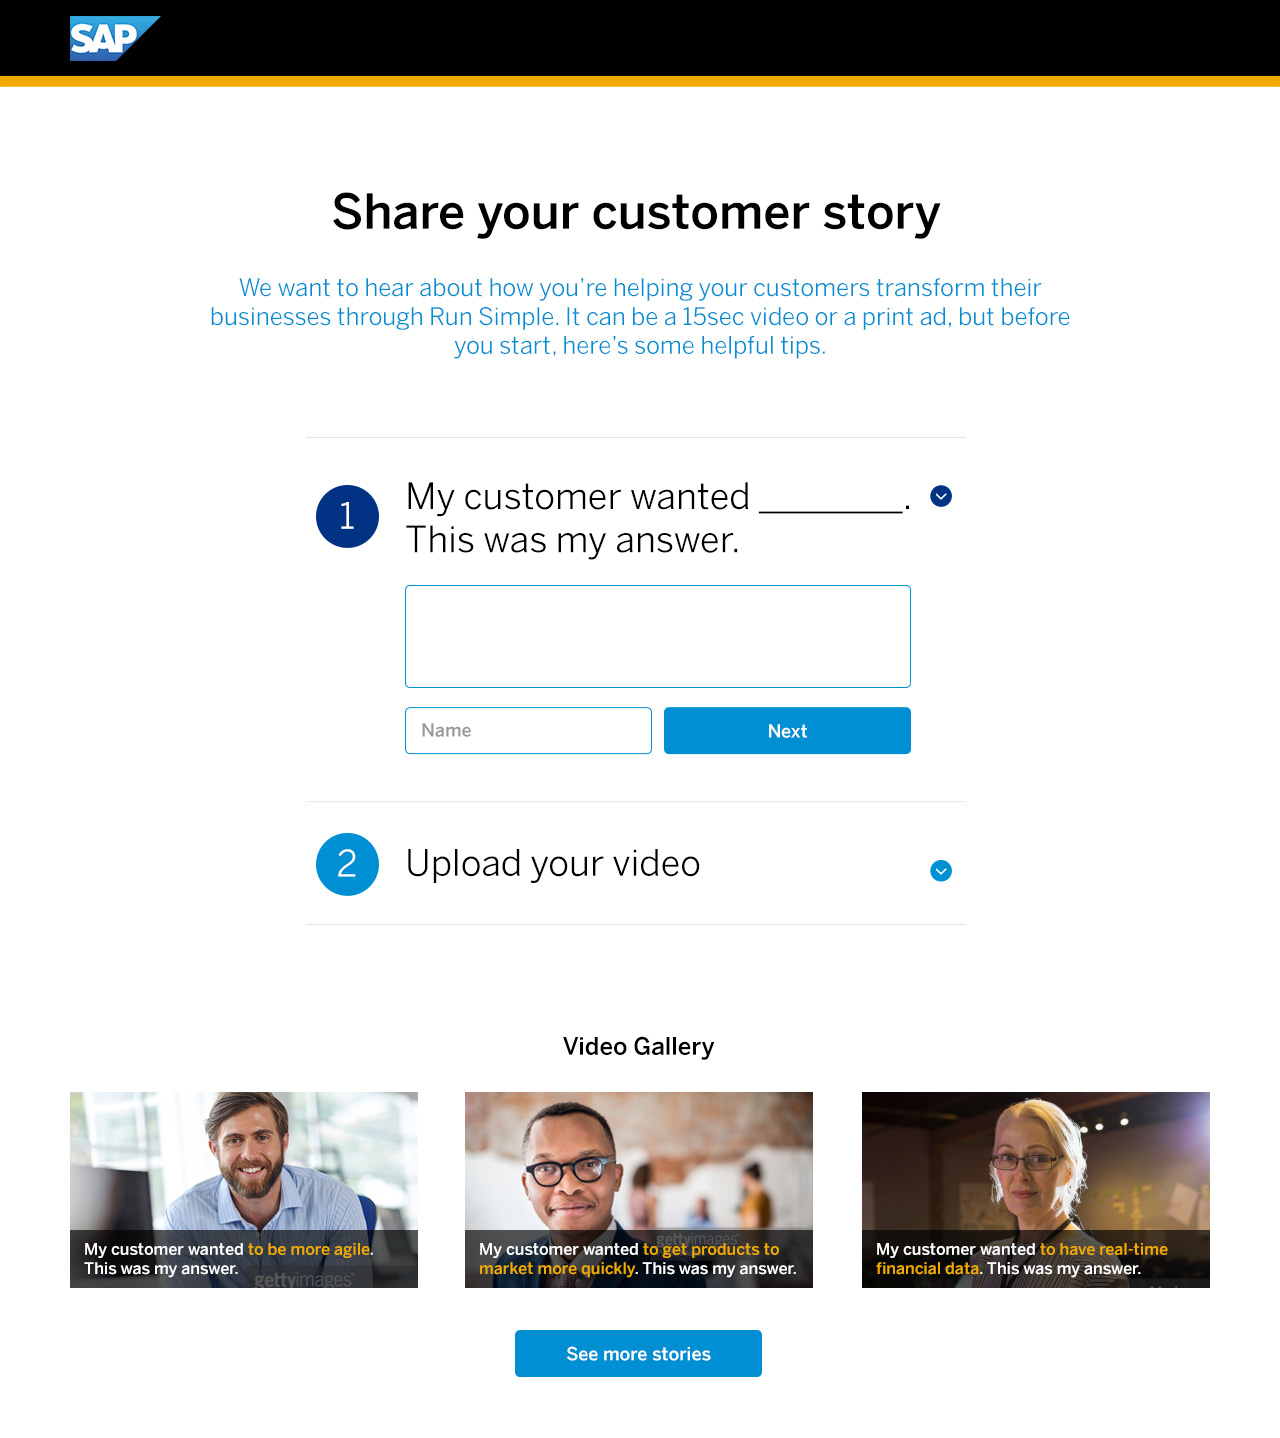 SAP Campaign Mockup Image